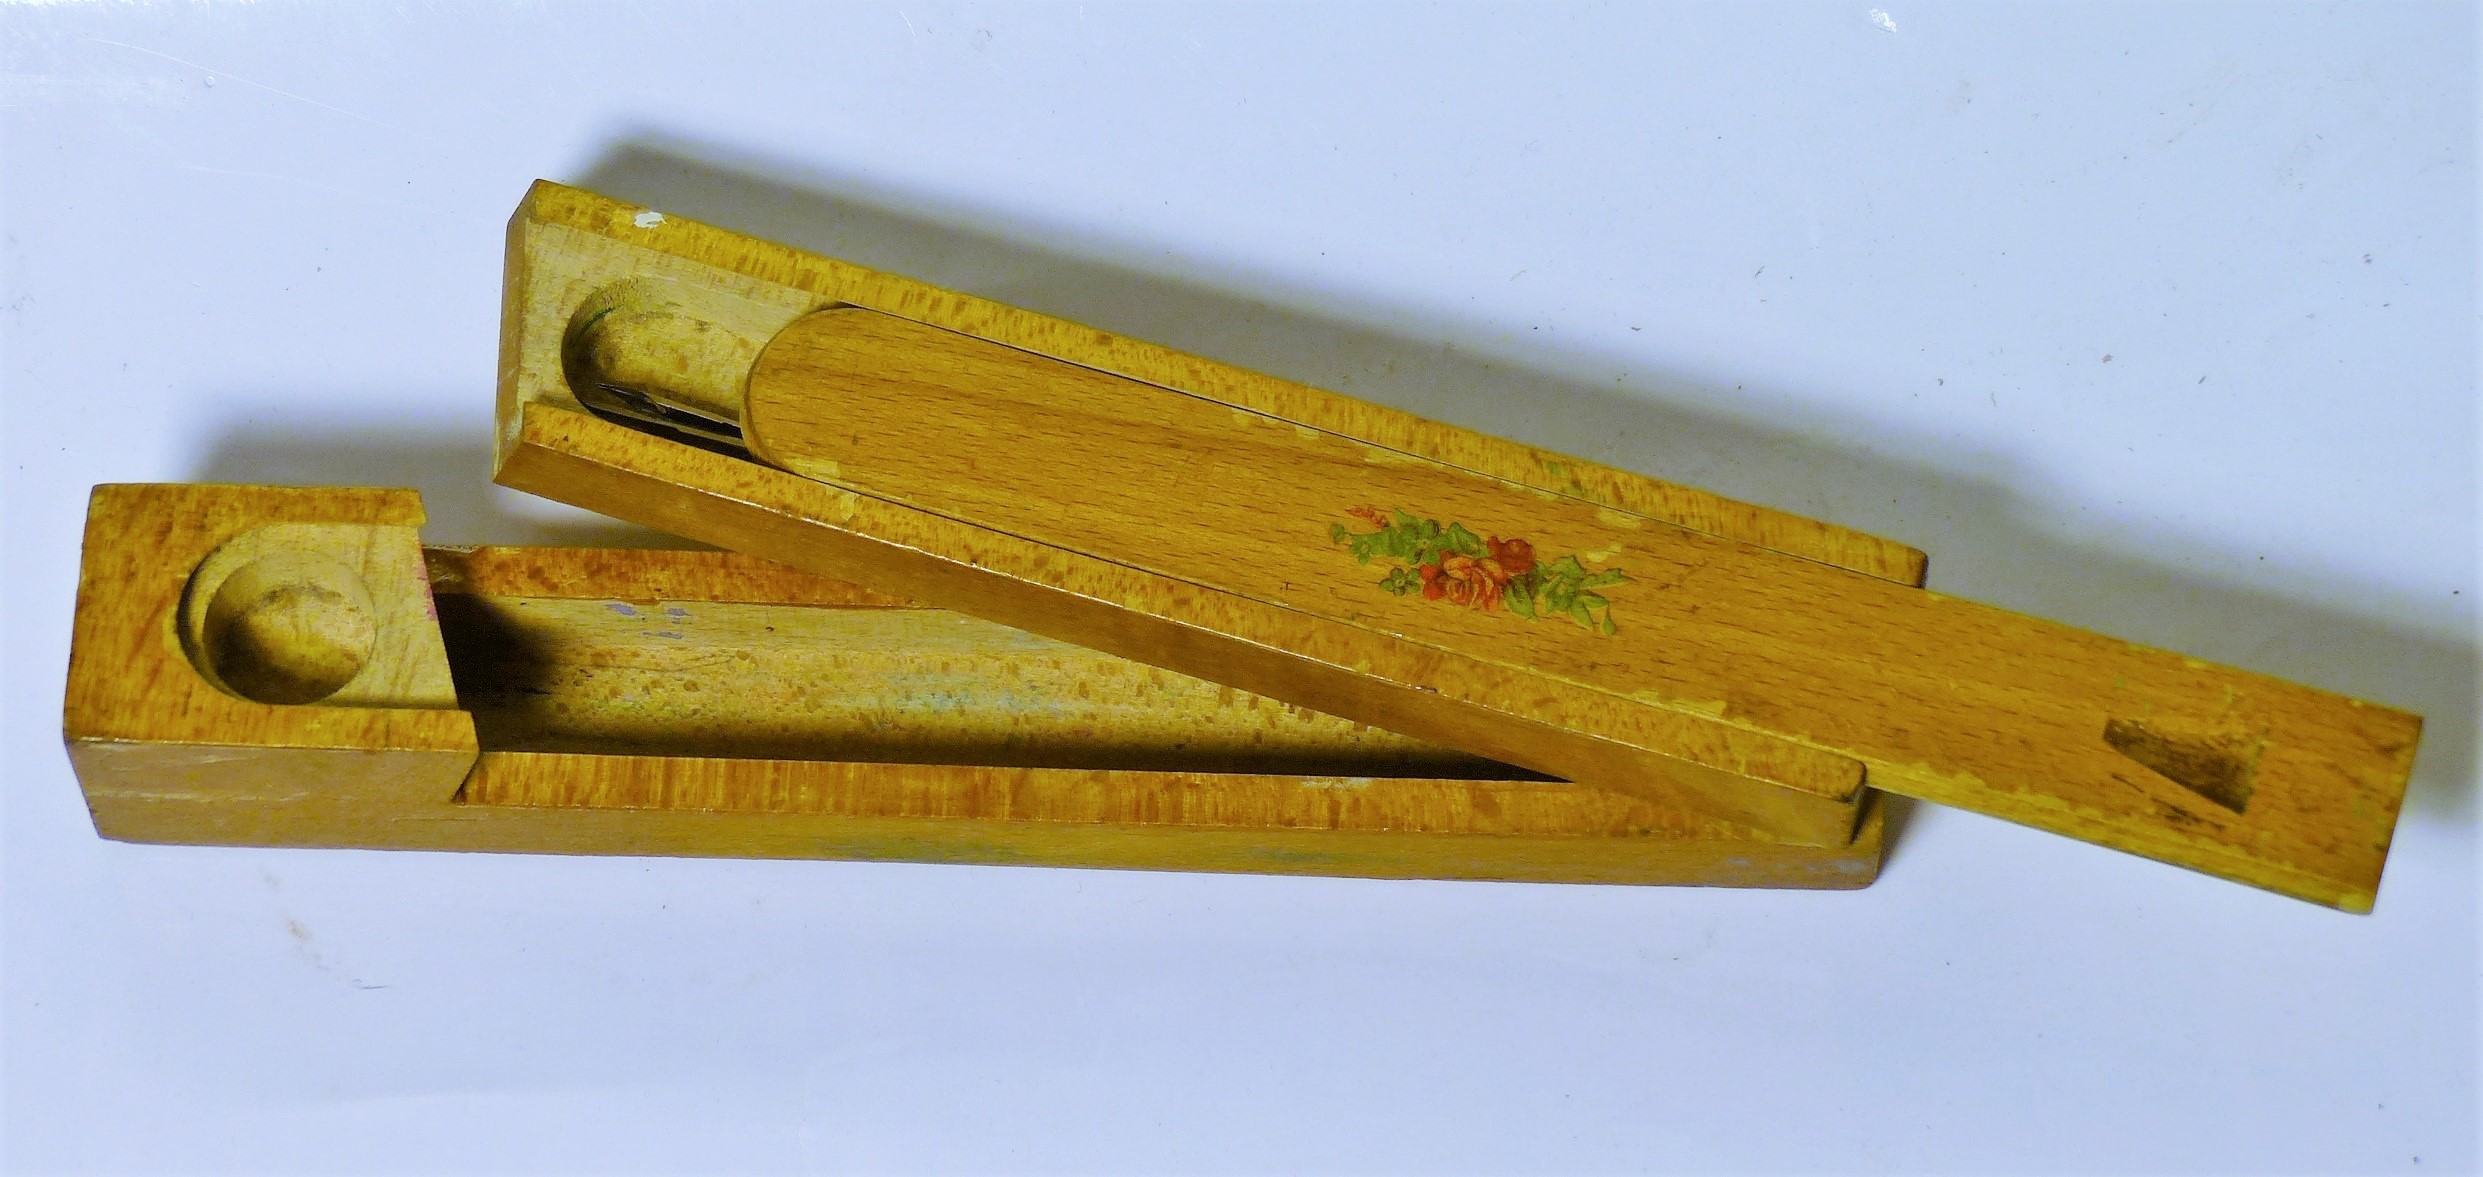 Fa tolltartó (Tapolcai Városi Múzeum CC BY-NC-SA)